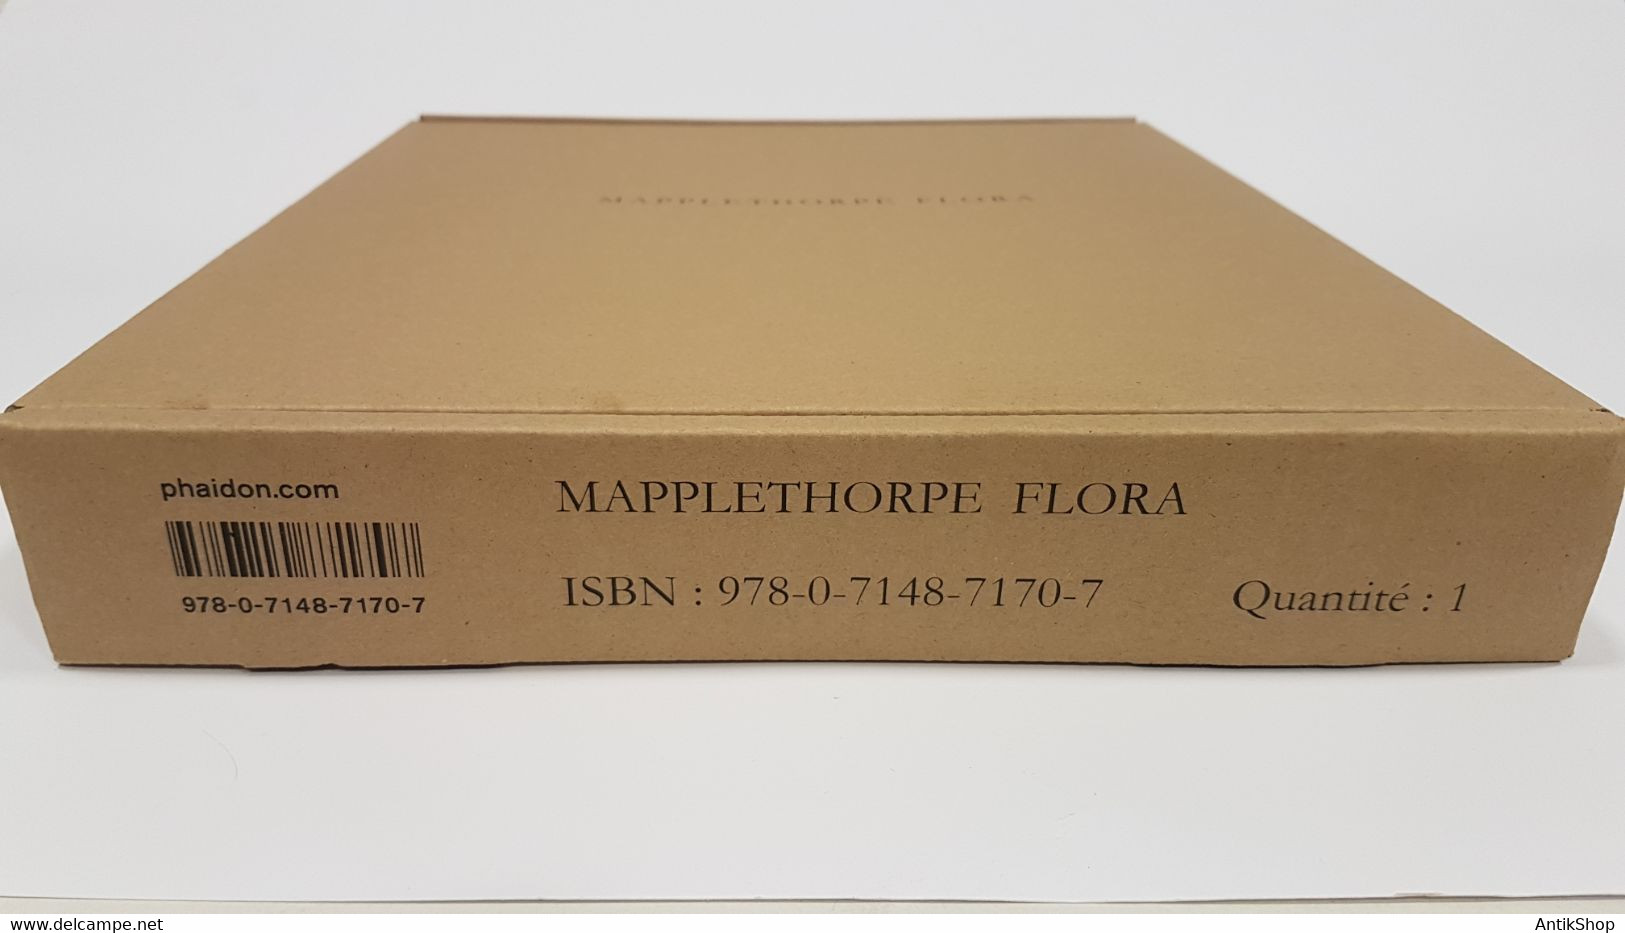 Robert Mapplethorpe: Flora: Les fleurs de Mapplethorpe